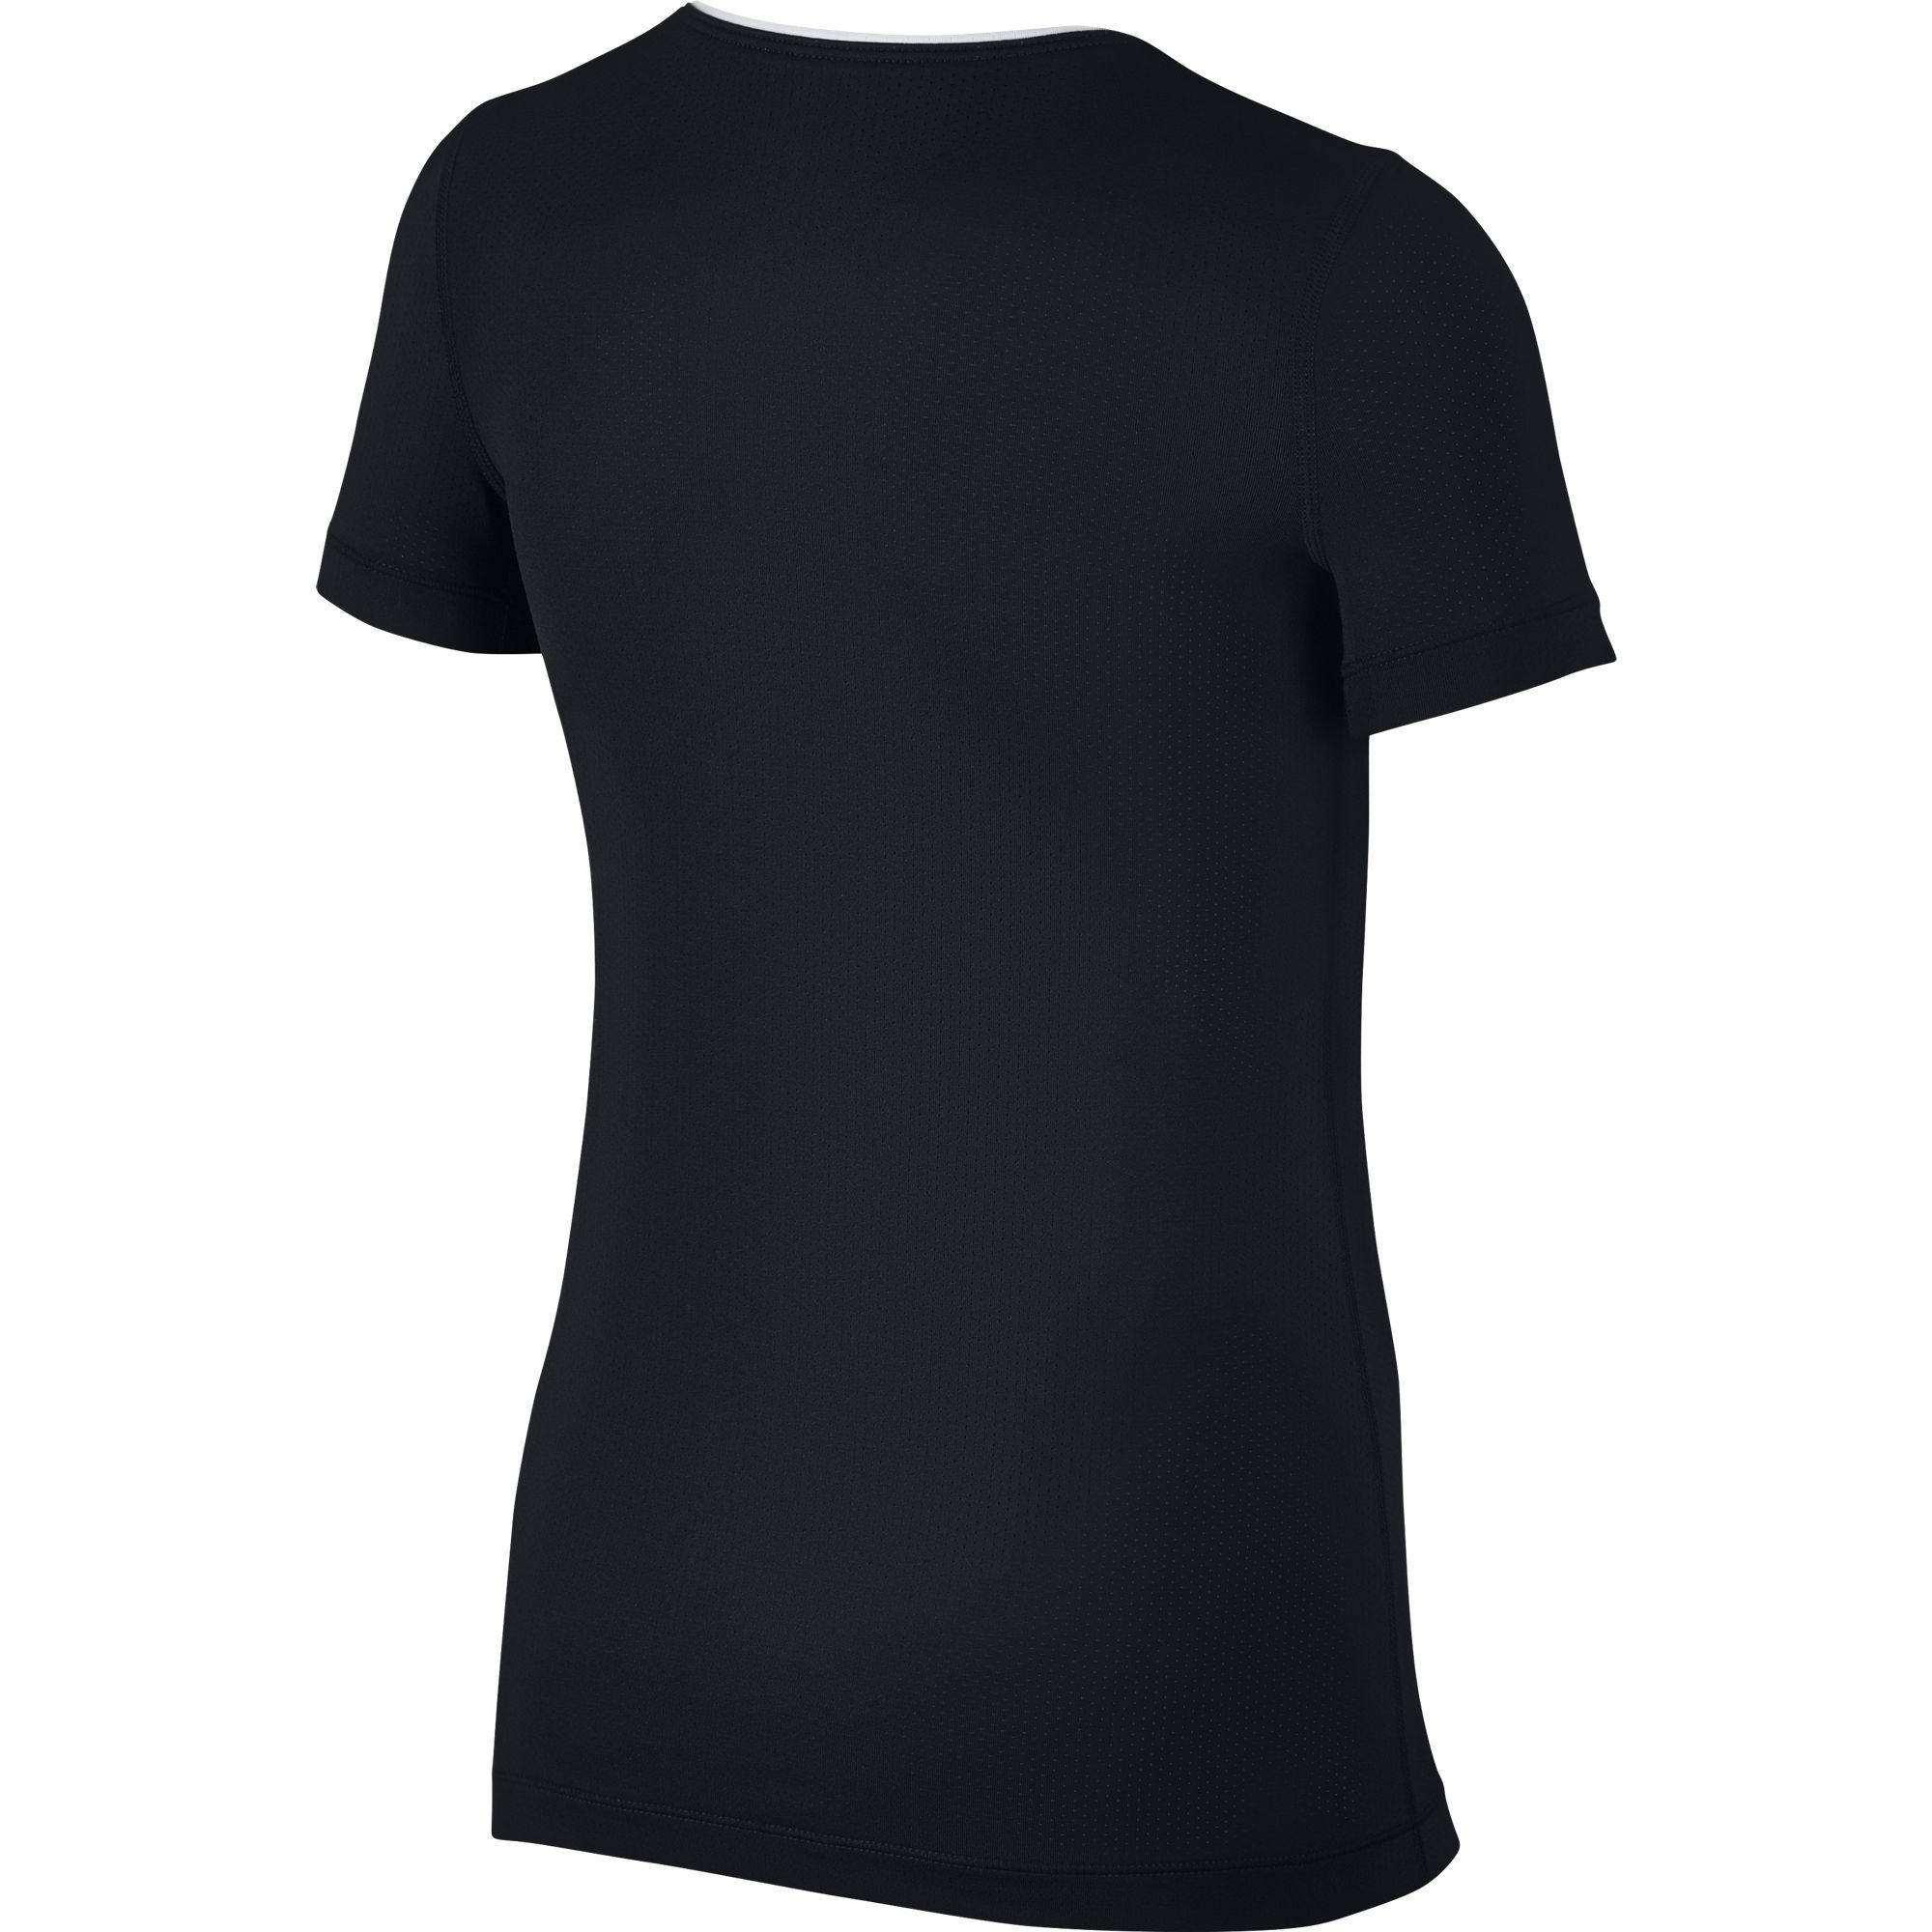 Nike Girls Pro Short Sleeve Top - Black/White - Tennisnuts.com